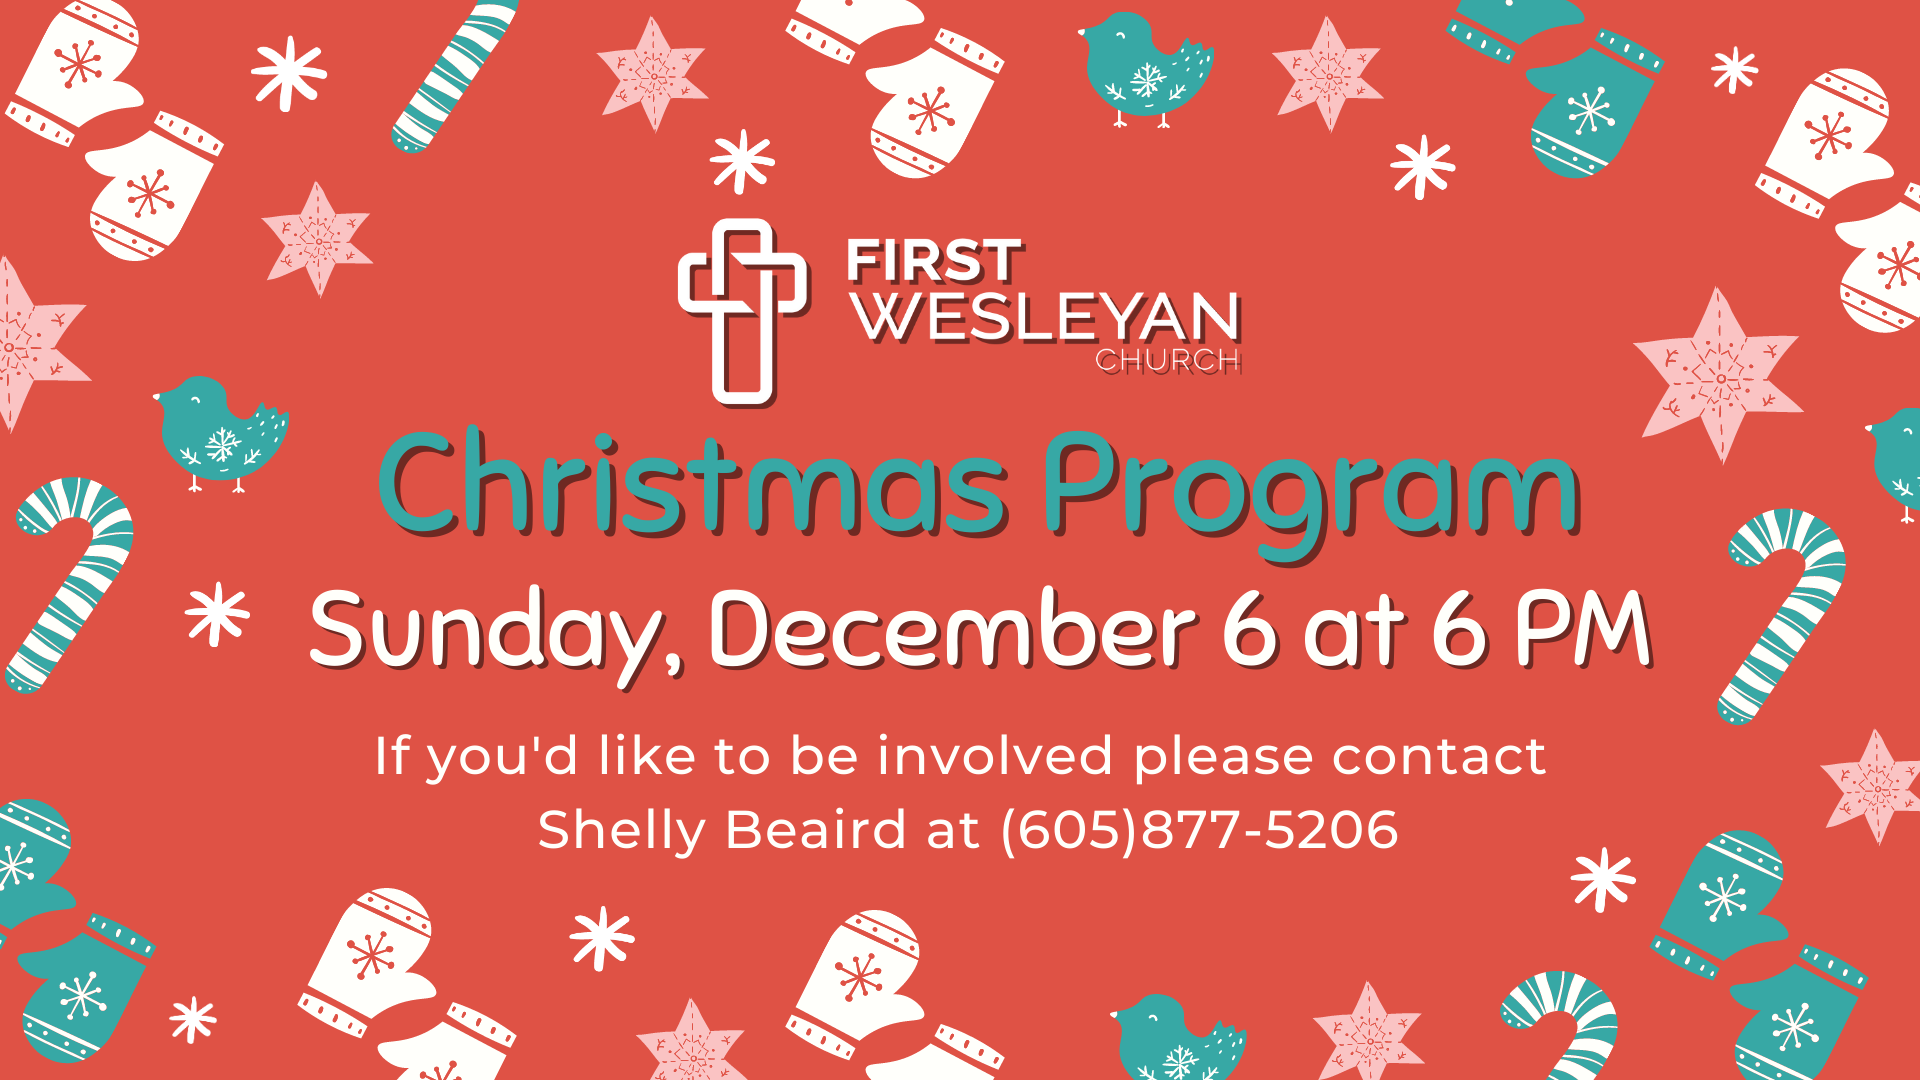 FWC Christmas Program First Wesleyan Church